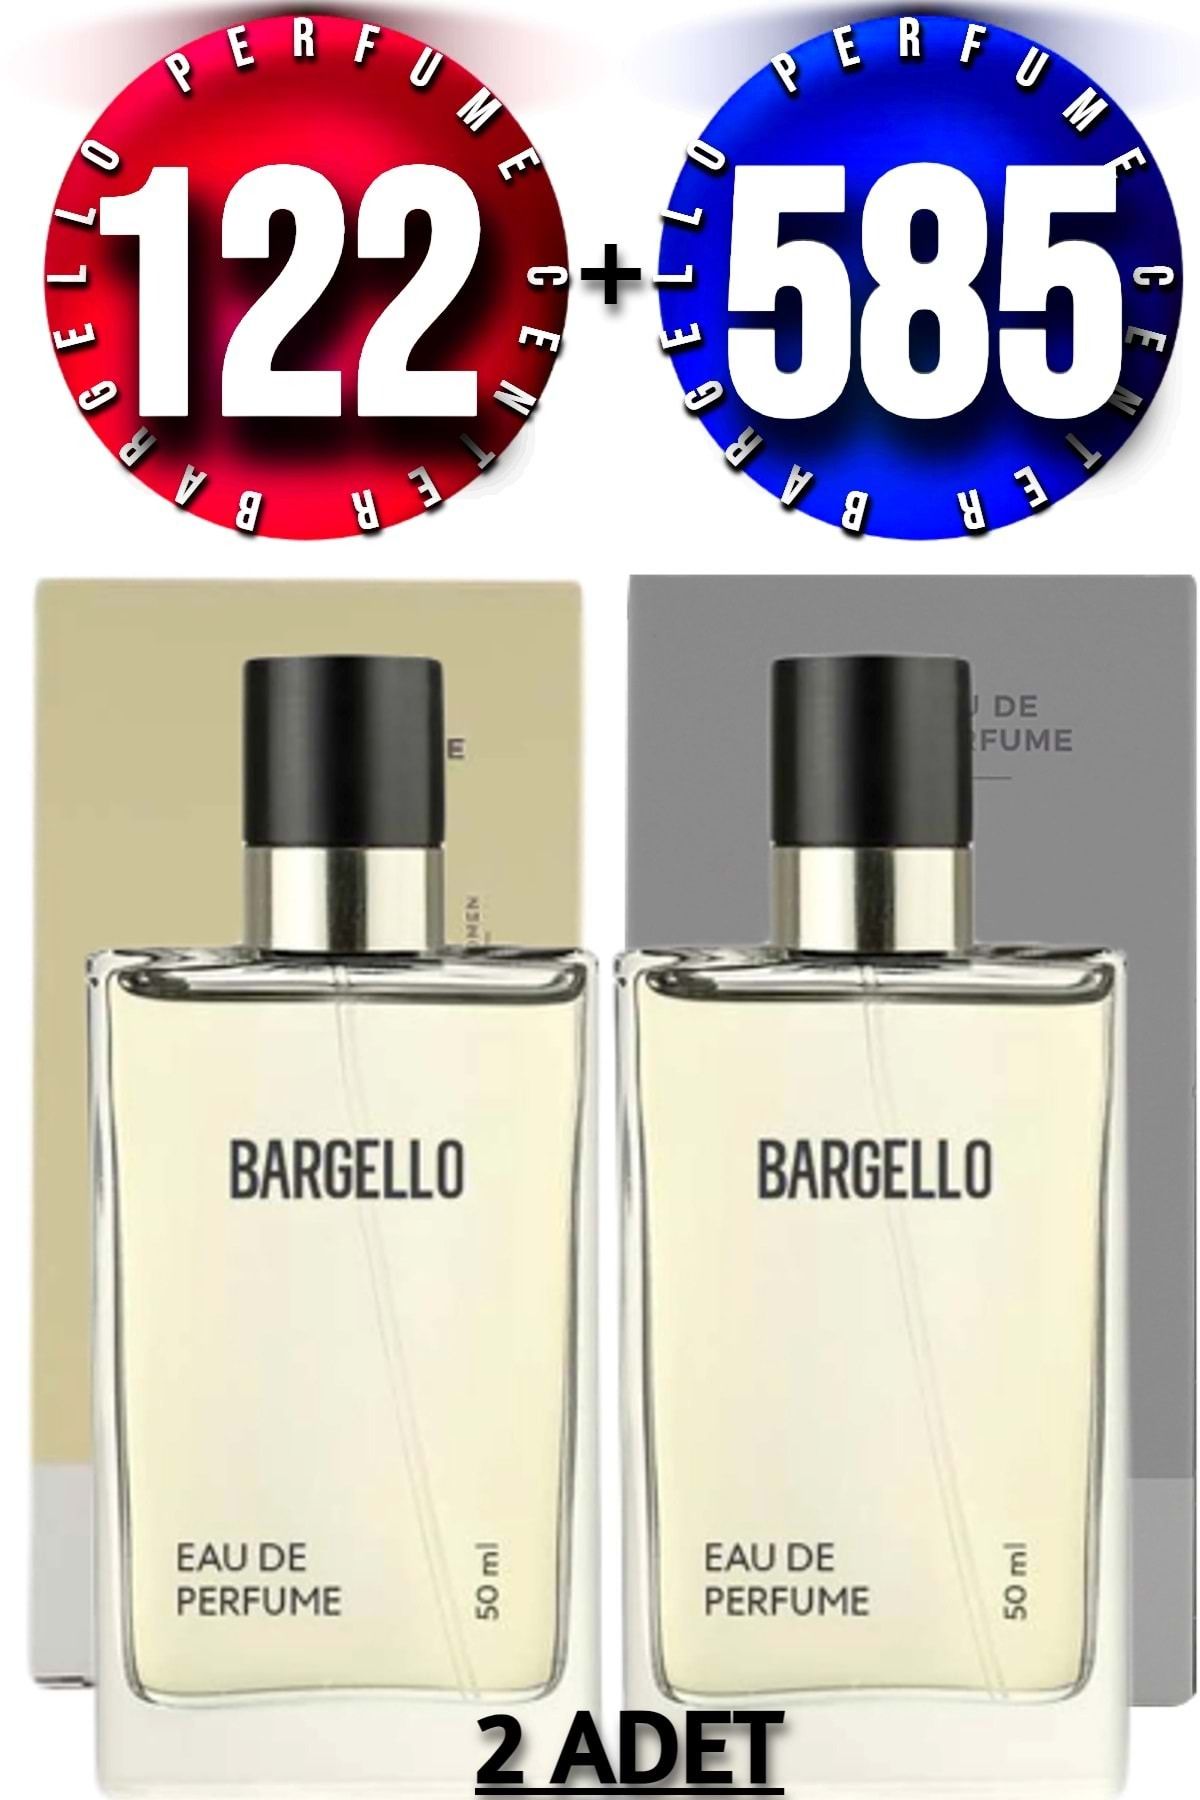 Bargello 122 Oriental Kadın Parfüm 50 ml Edp 585 Floral Erkek Parfüm 50 ml Edp